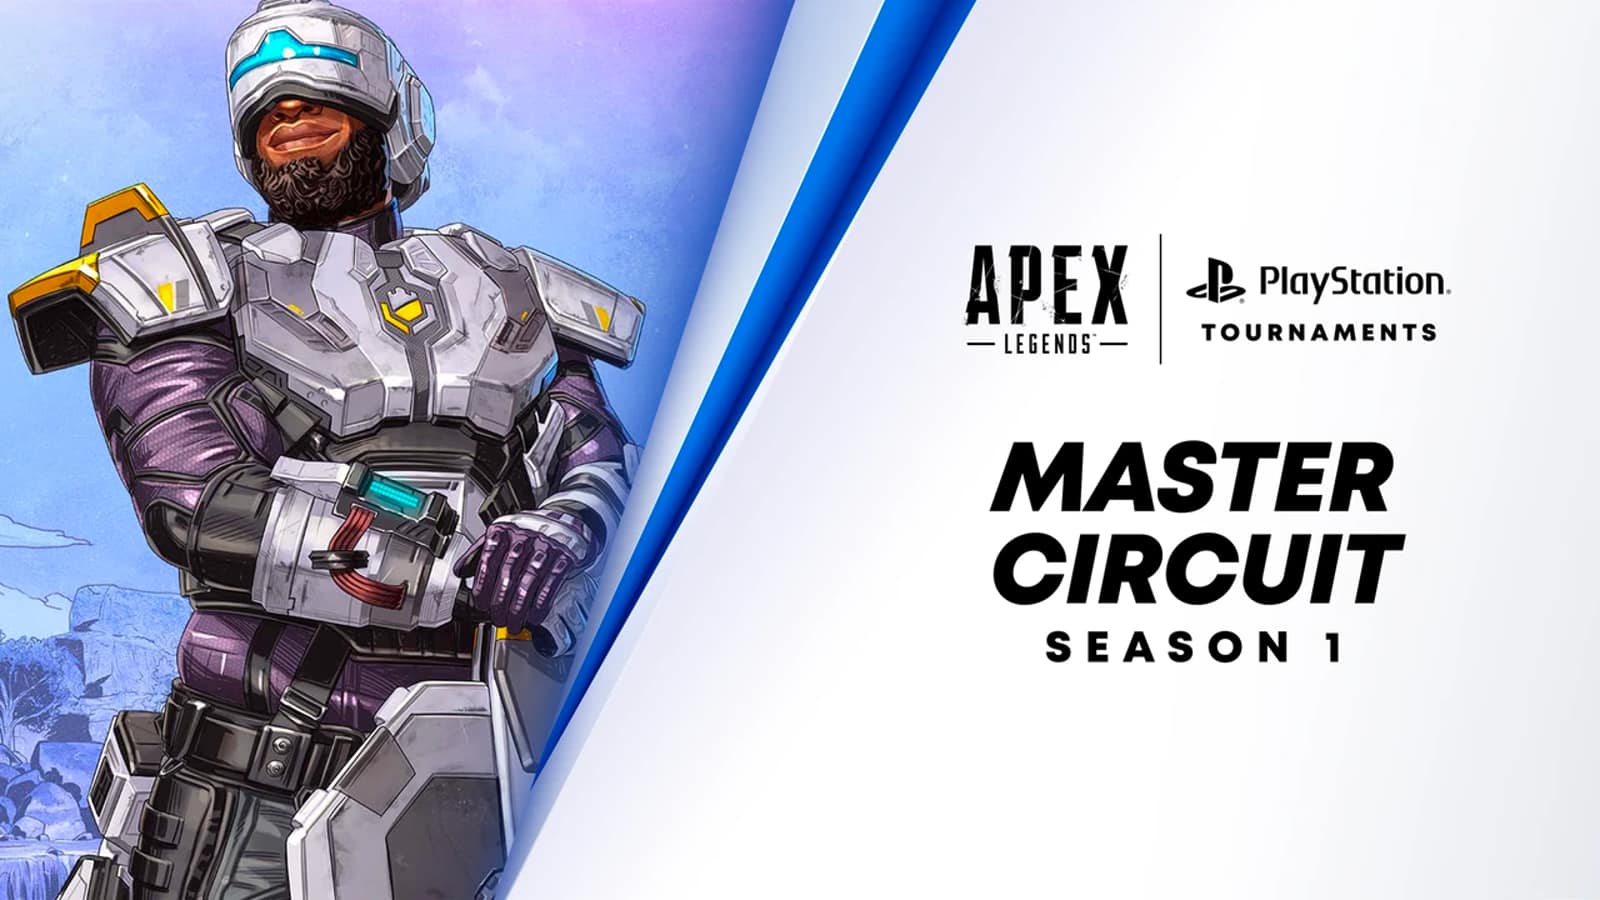 Apex Legends PlayStation master circuit event